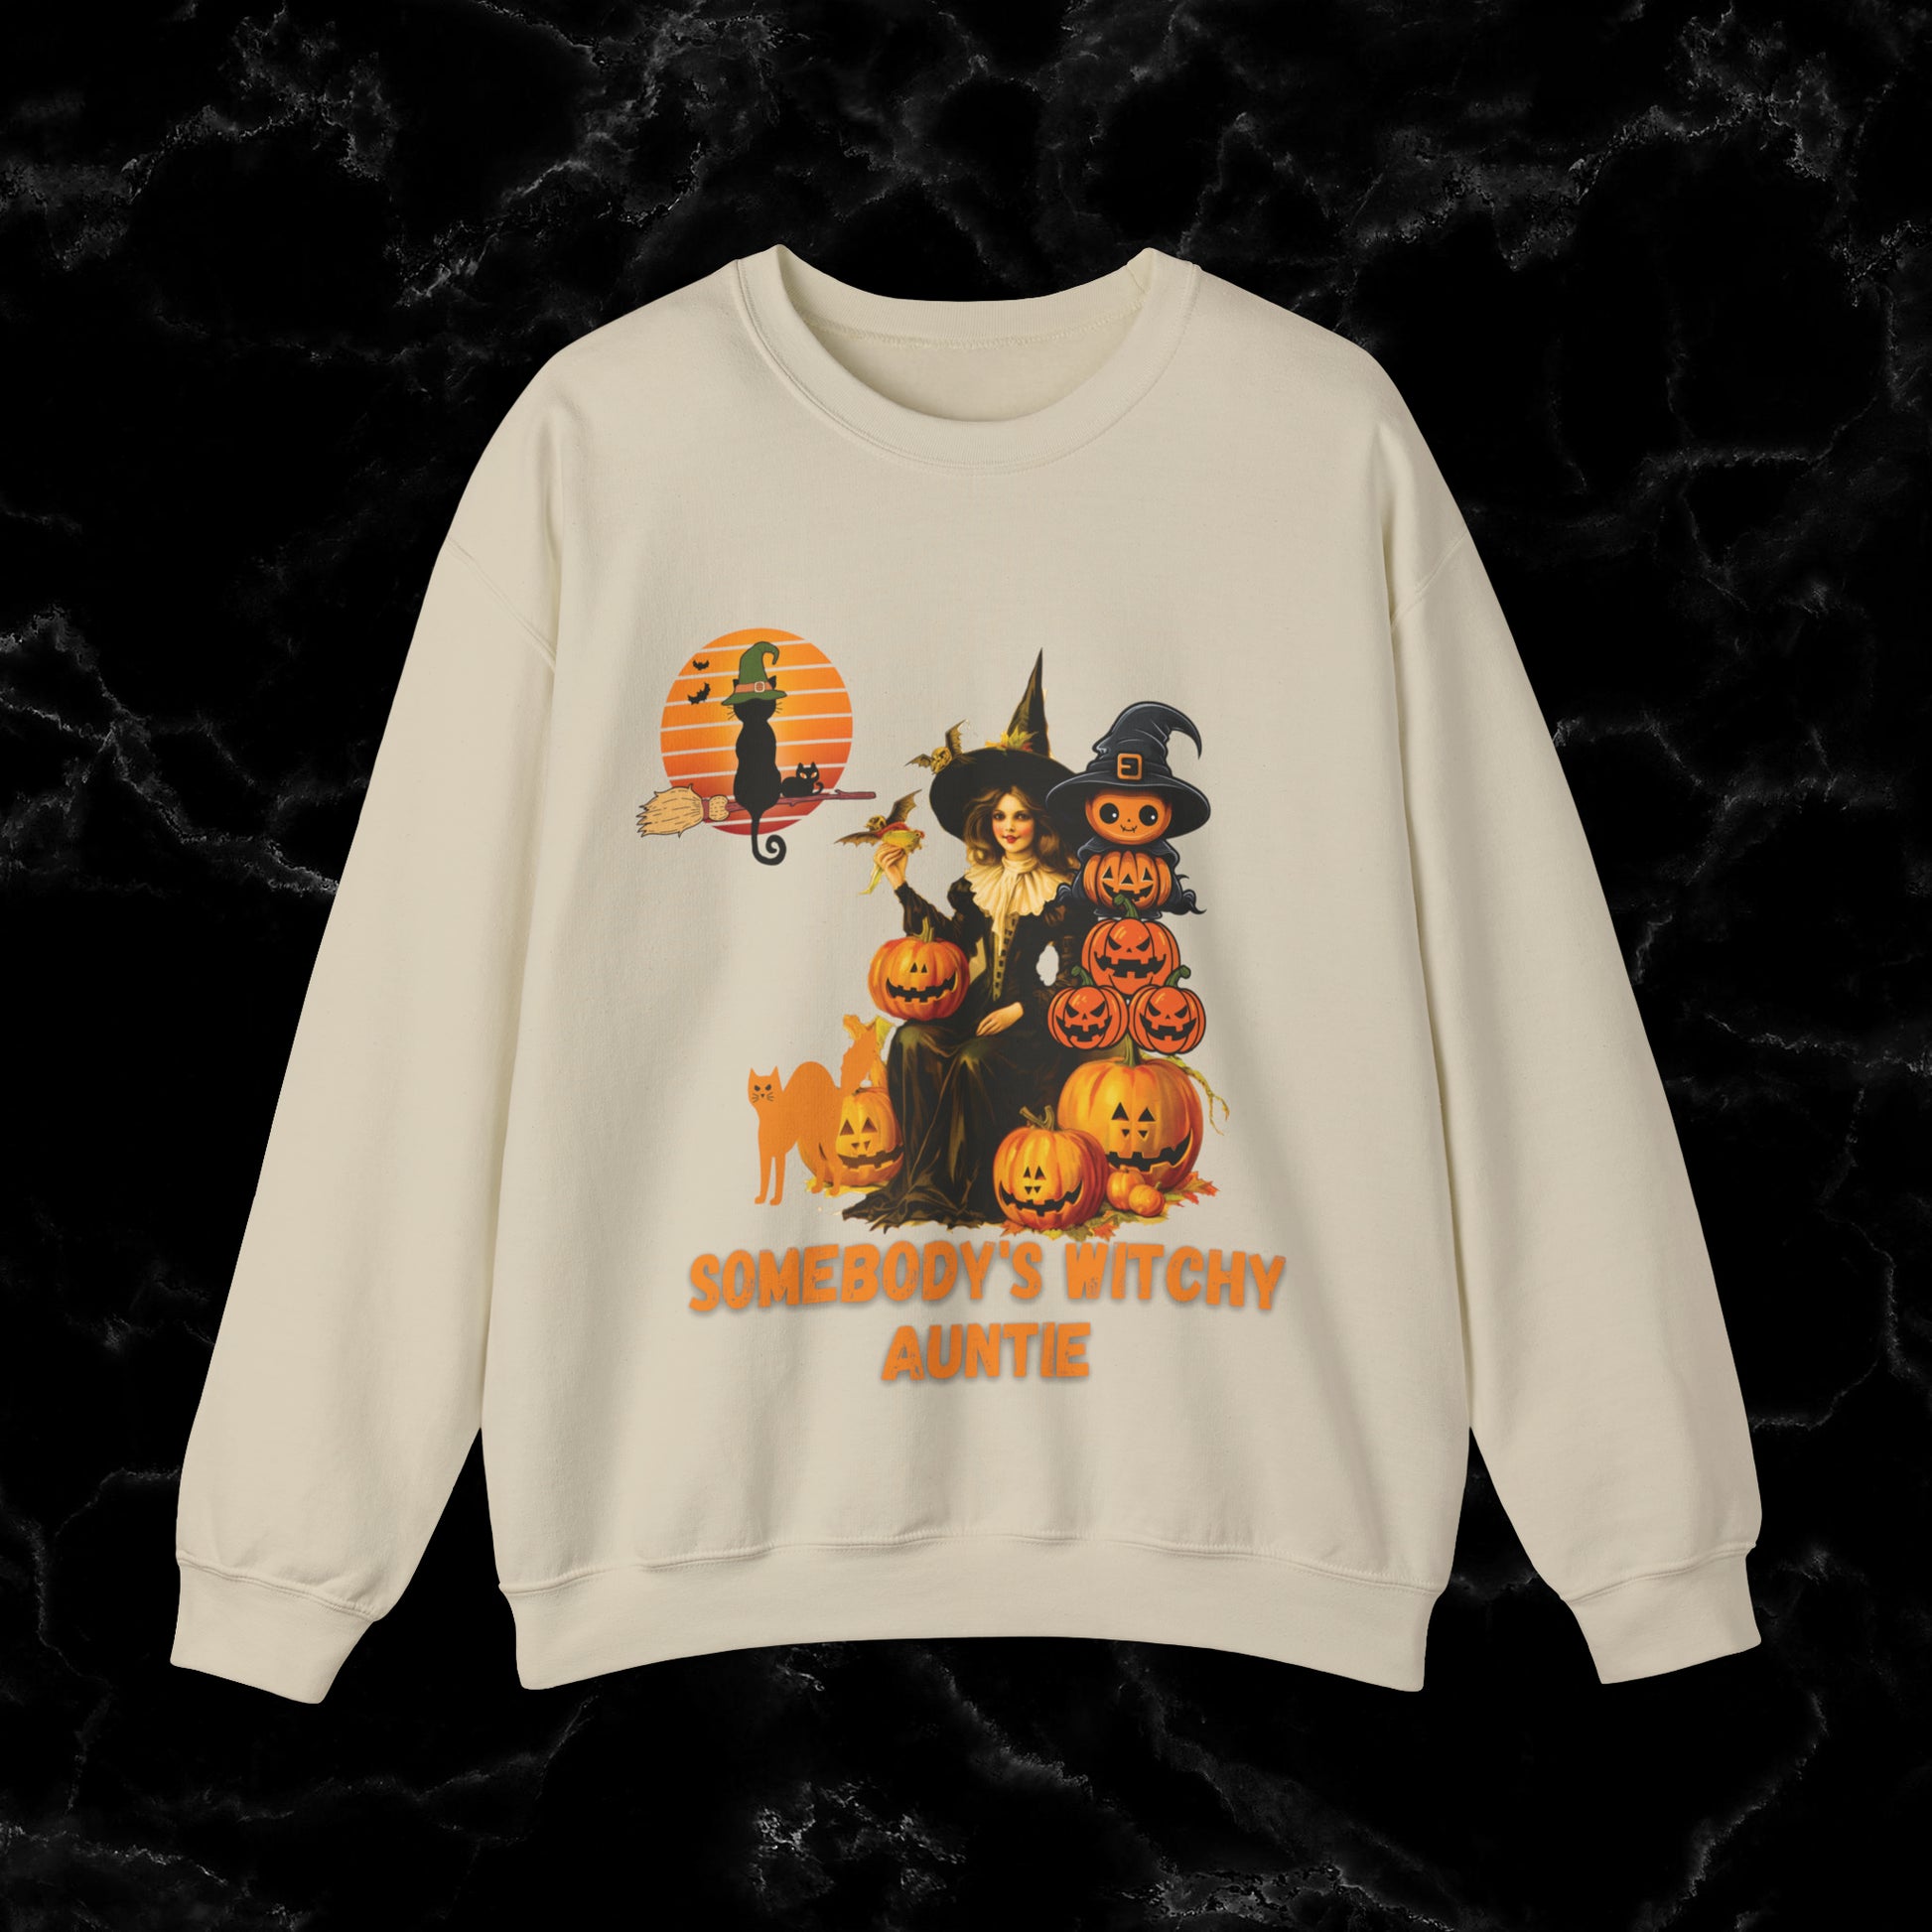 Somebody's Witchy Auntie Sweatshirt - Cool Aunt Shirt for Halloween Sweatshirt S Sand 